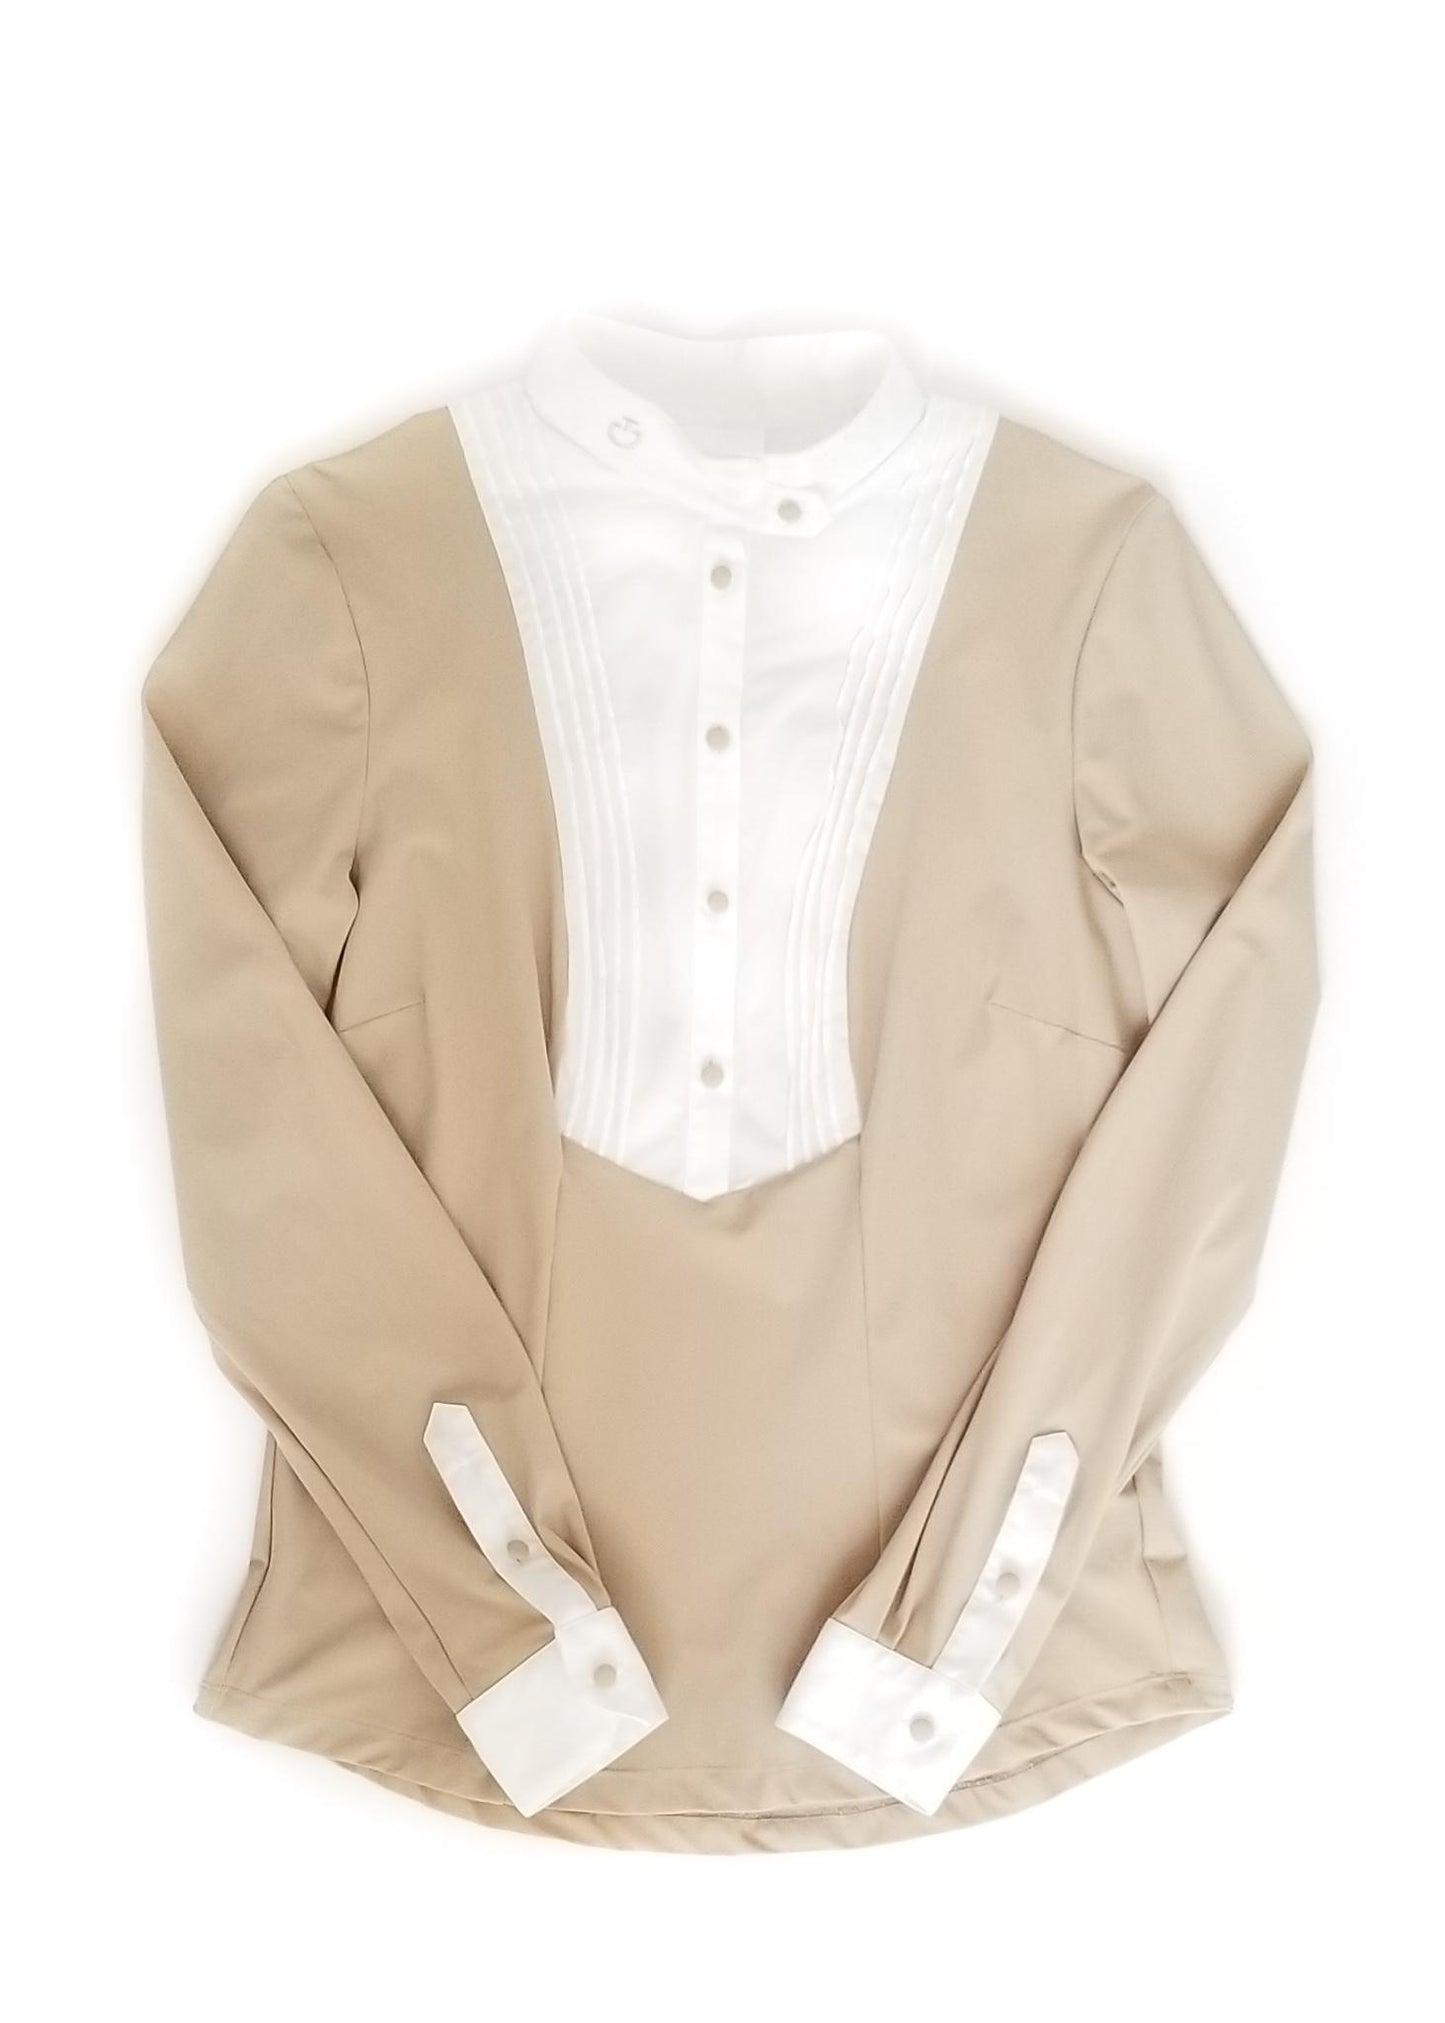 Cavalleria Toscana Ladies Technical Long Sleeve Show Shirt with Bib - Tan/White - Women's Small